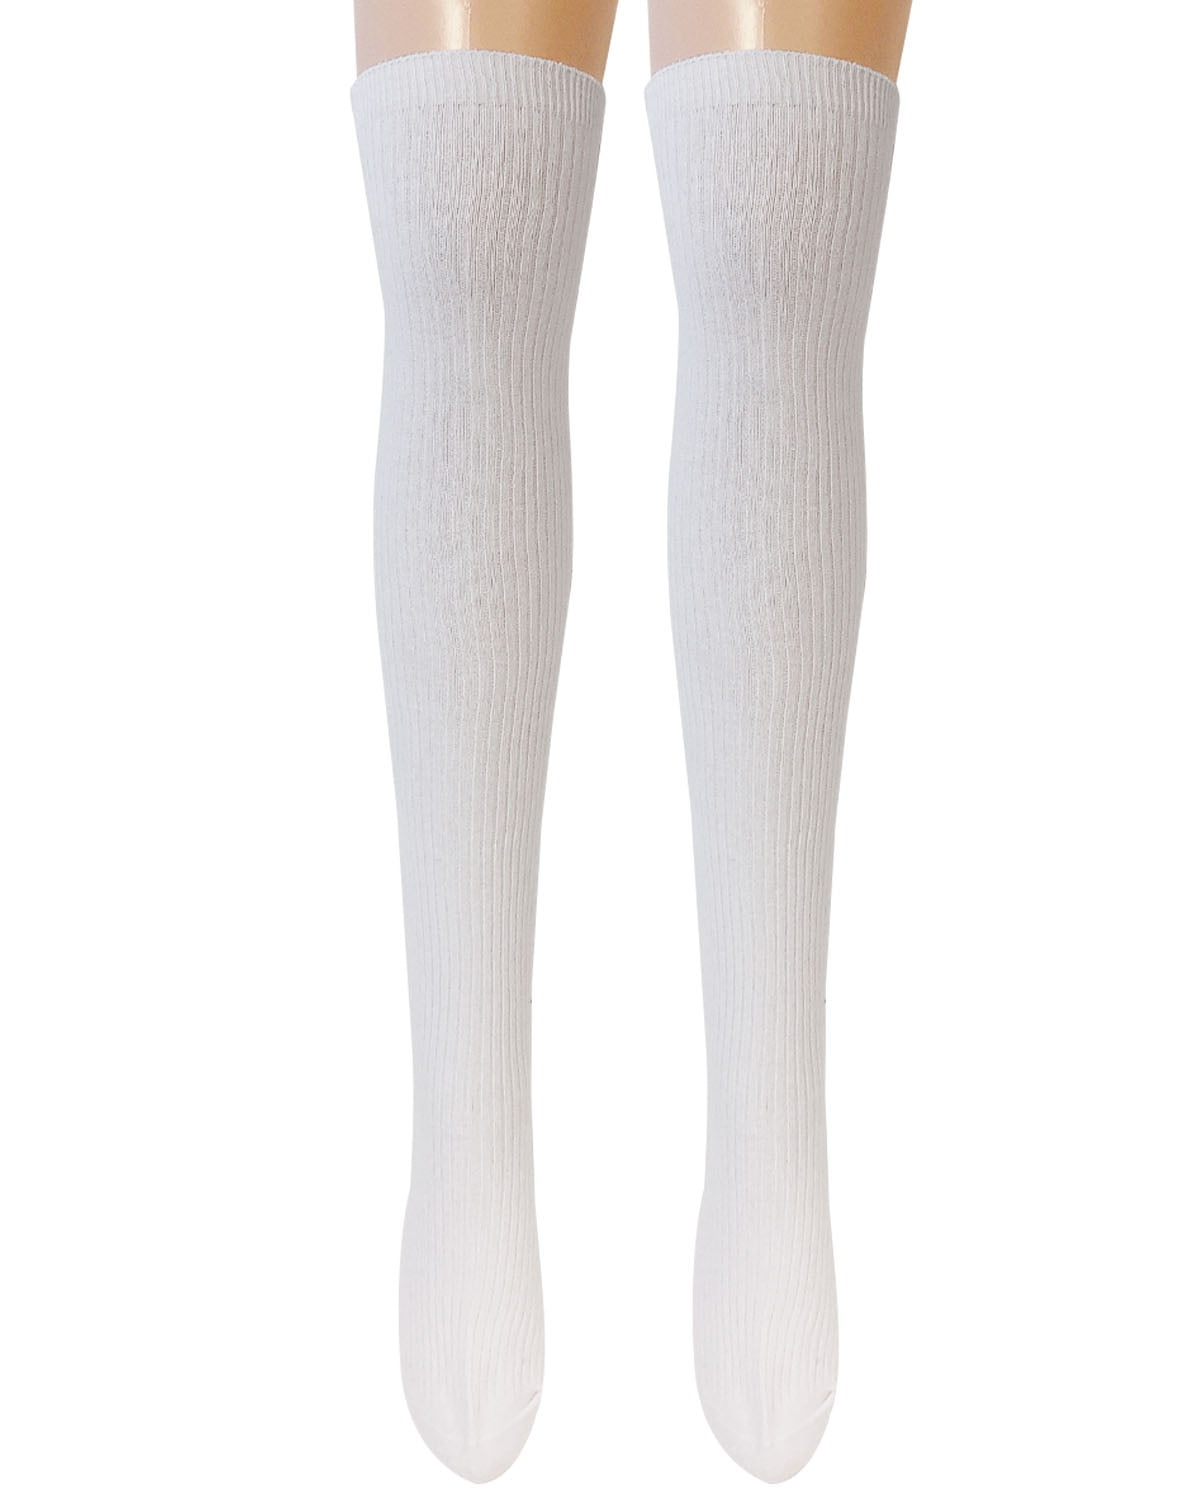 Wrapables® Women's Ribbed Knee High Boot Socks, White - Walmart.com